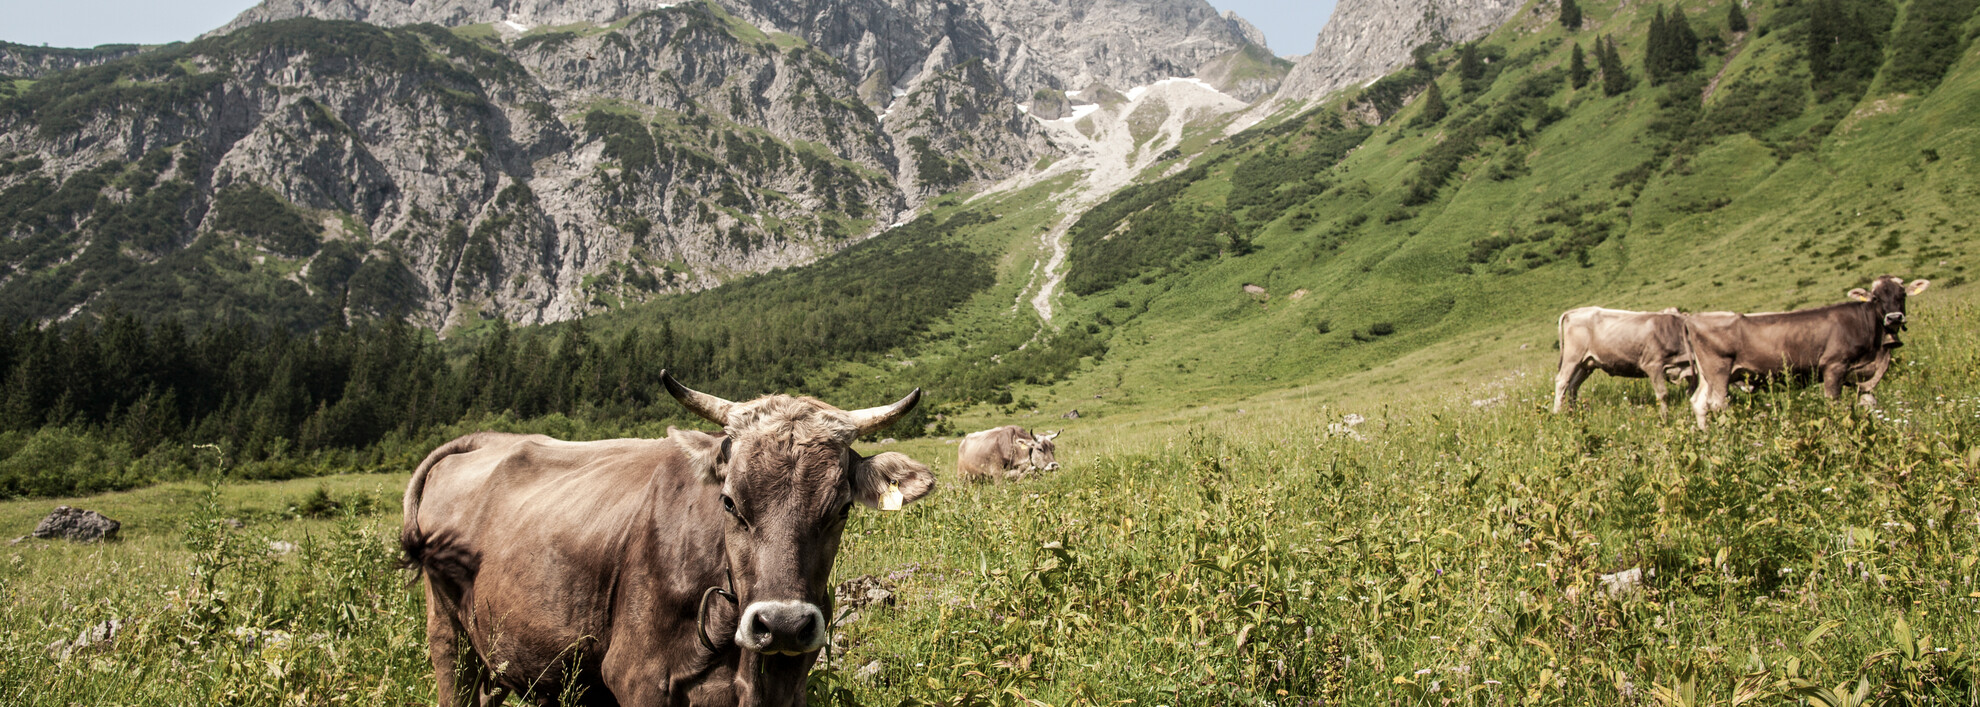 Cows on the Alp | © Kleinwalsertal Tourismus eGen | Photographer: Frank Drechsel